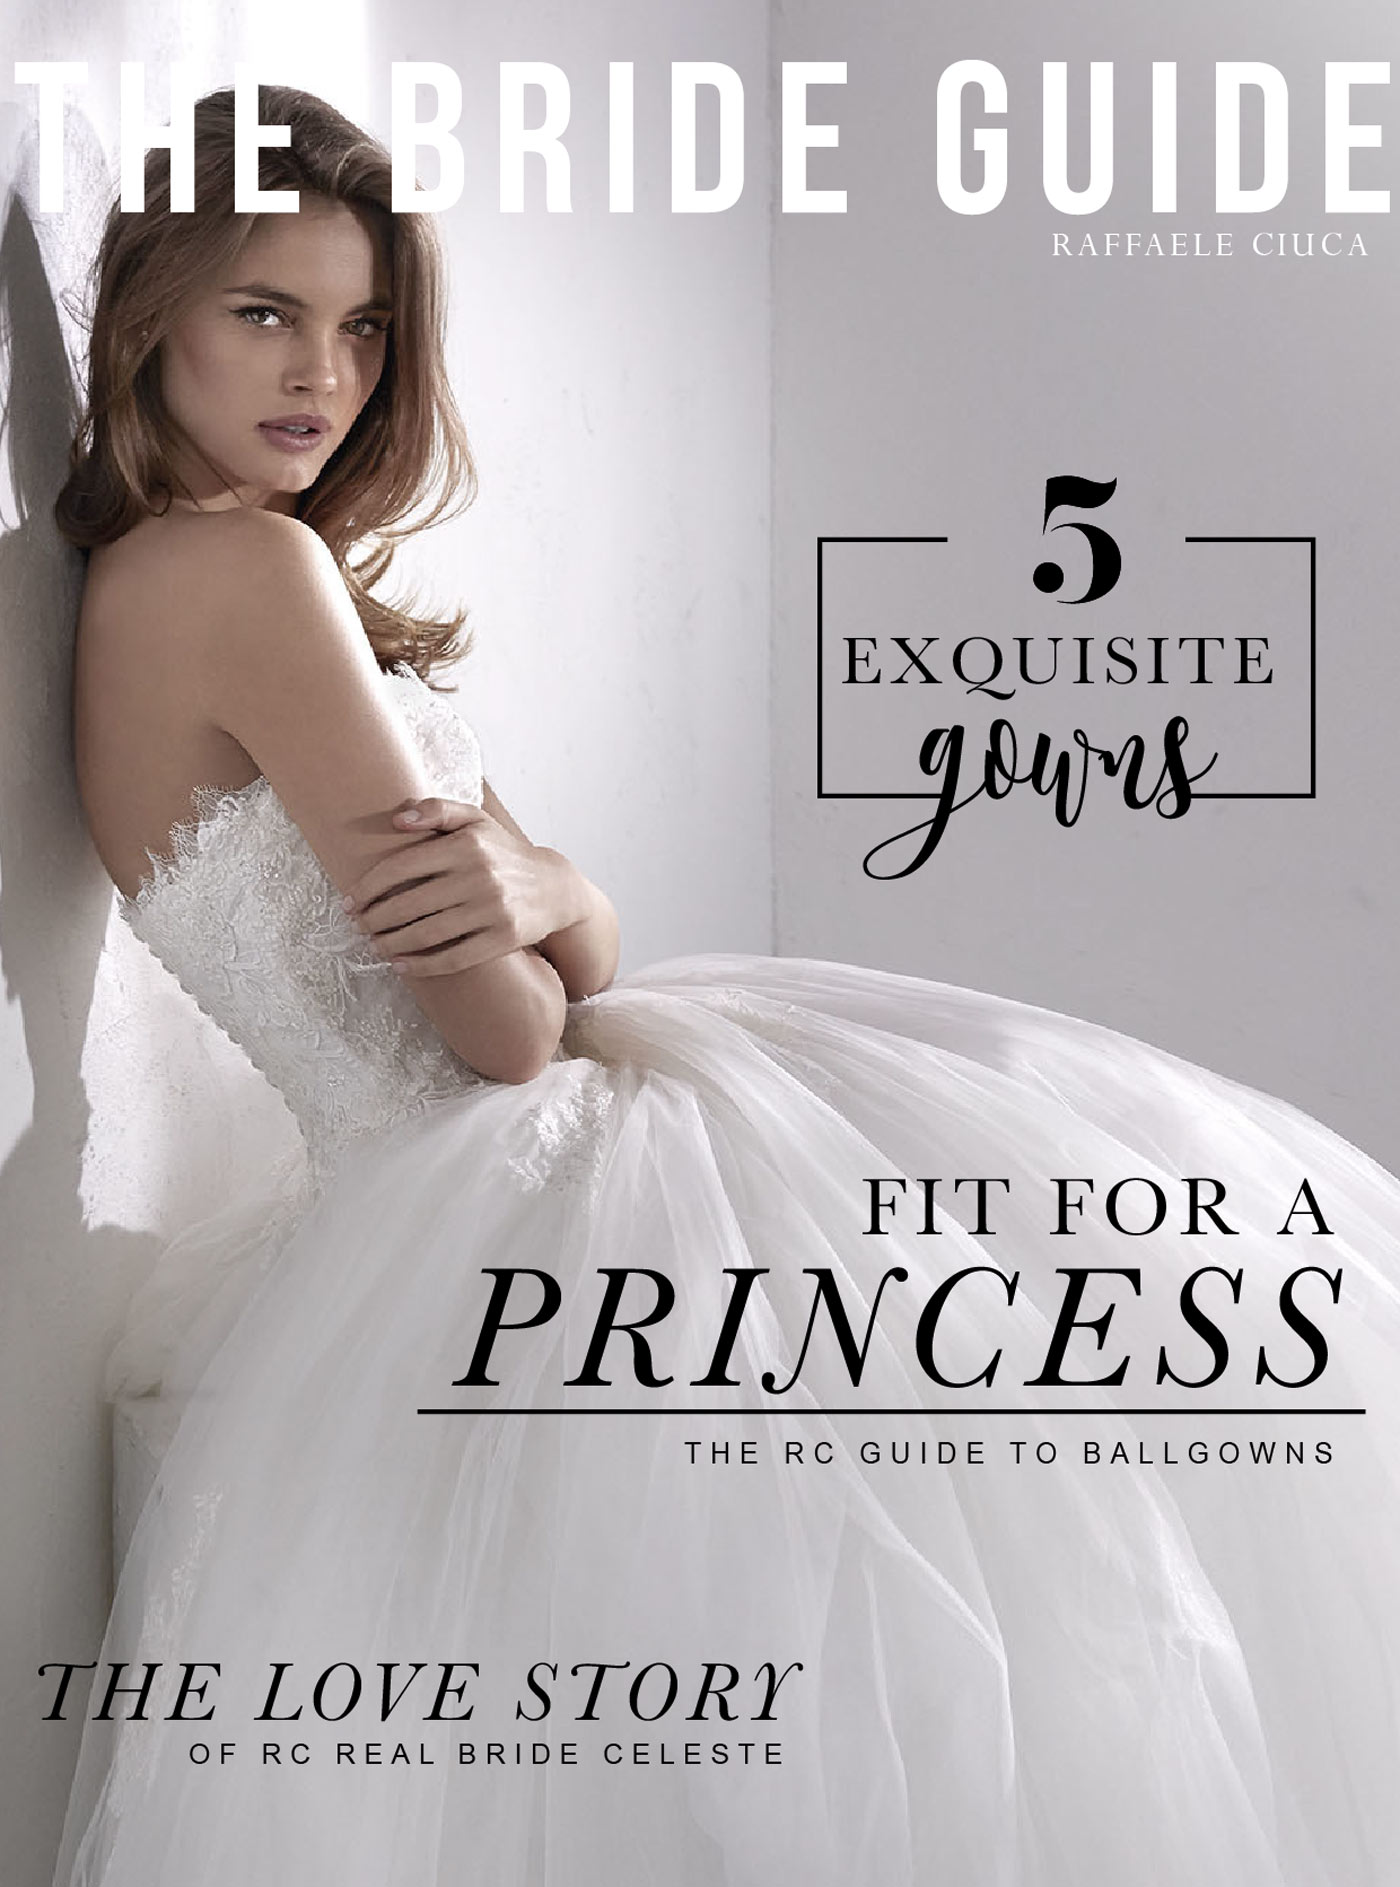 The Bride Guide | Weekly wedding inspiration by Raffaele Ciuca